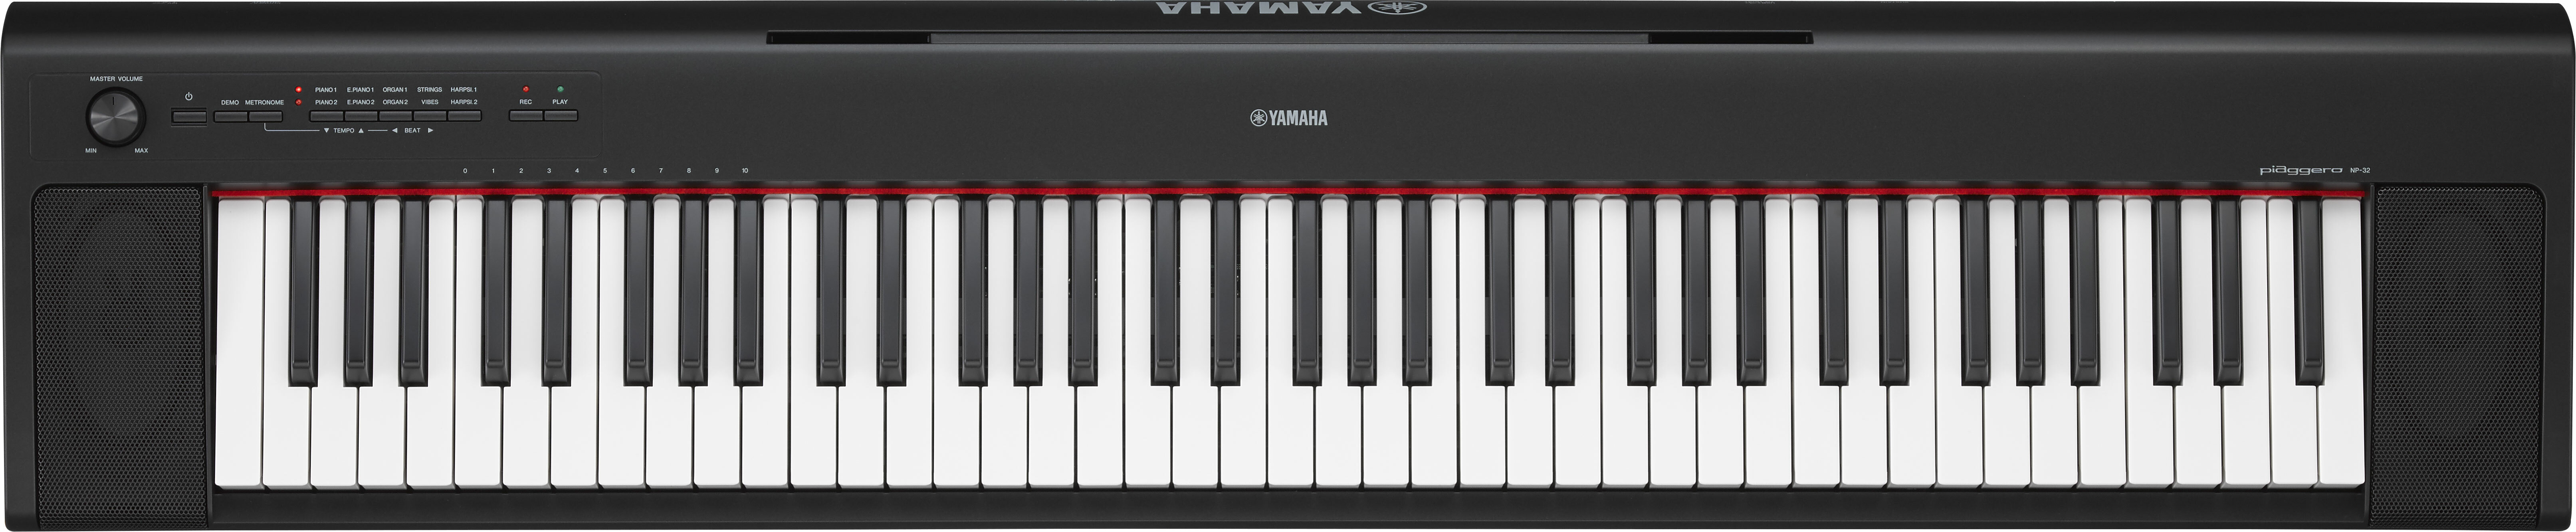 Yamaha Np-32 - Black - Portable digital piano - Main picture